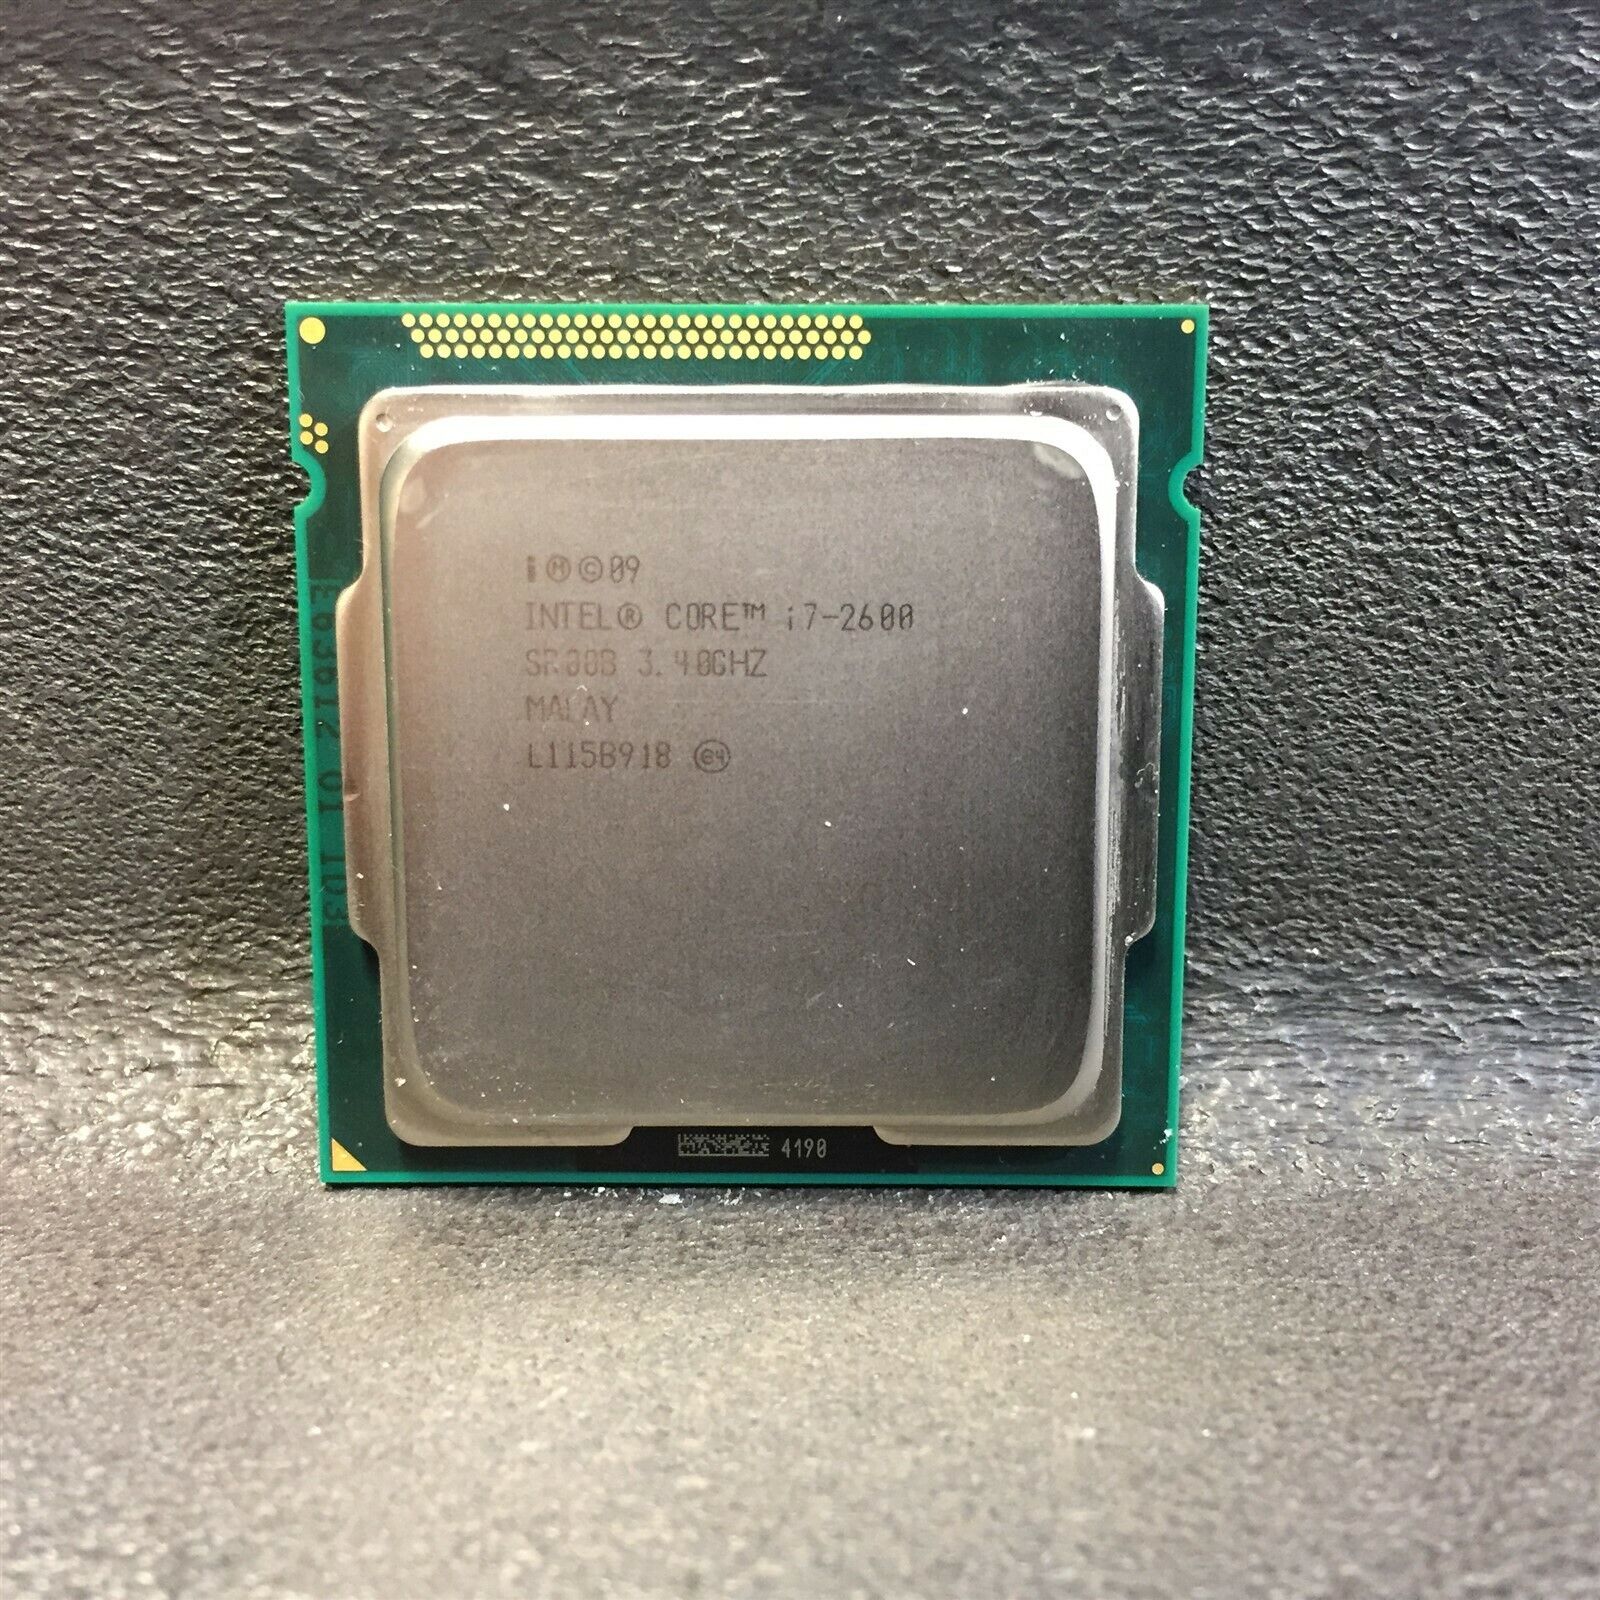 Intel Core i7-2600 SR00B 3.40GHz 8MB Quad Core LGA1155 Processor CPU Tested